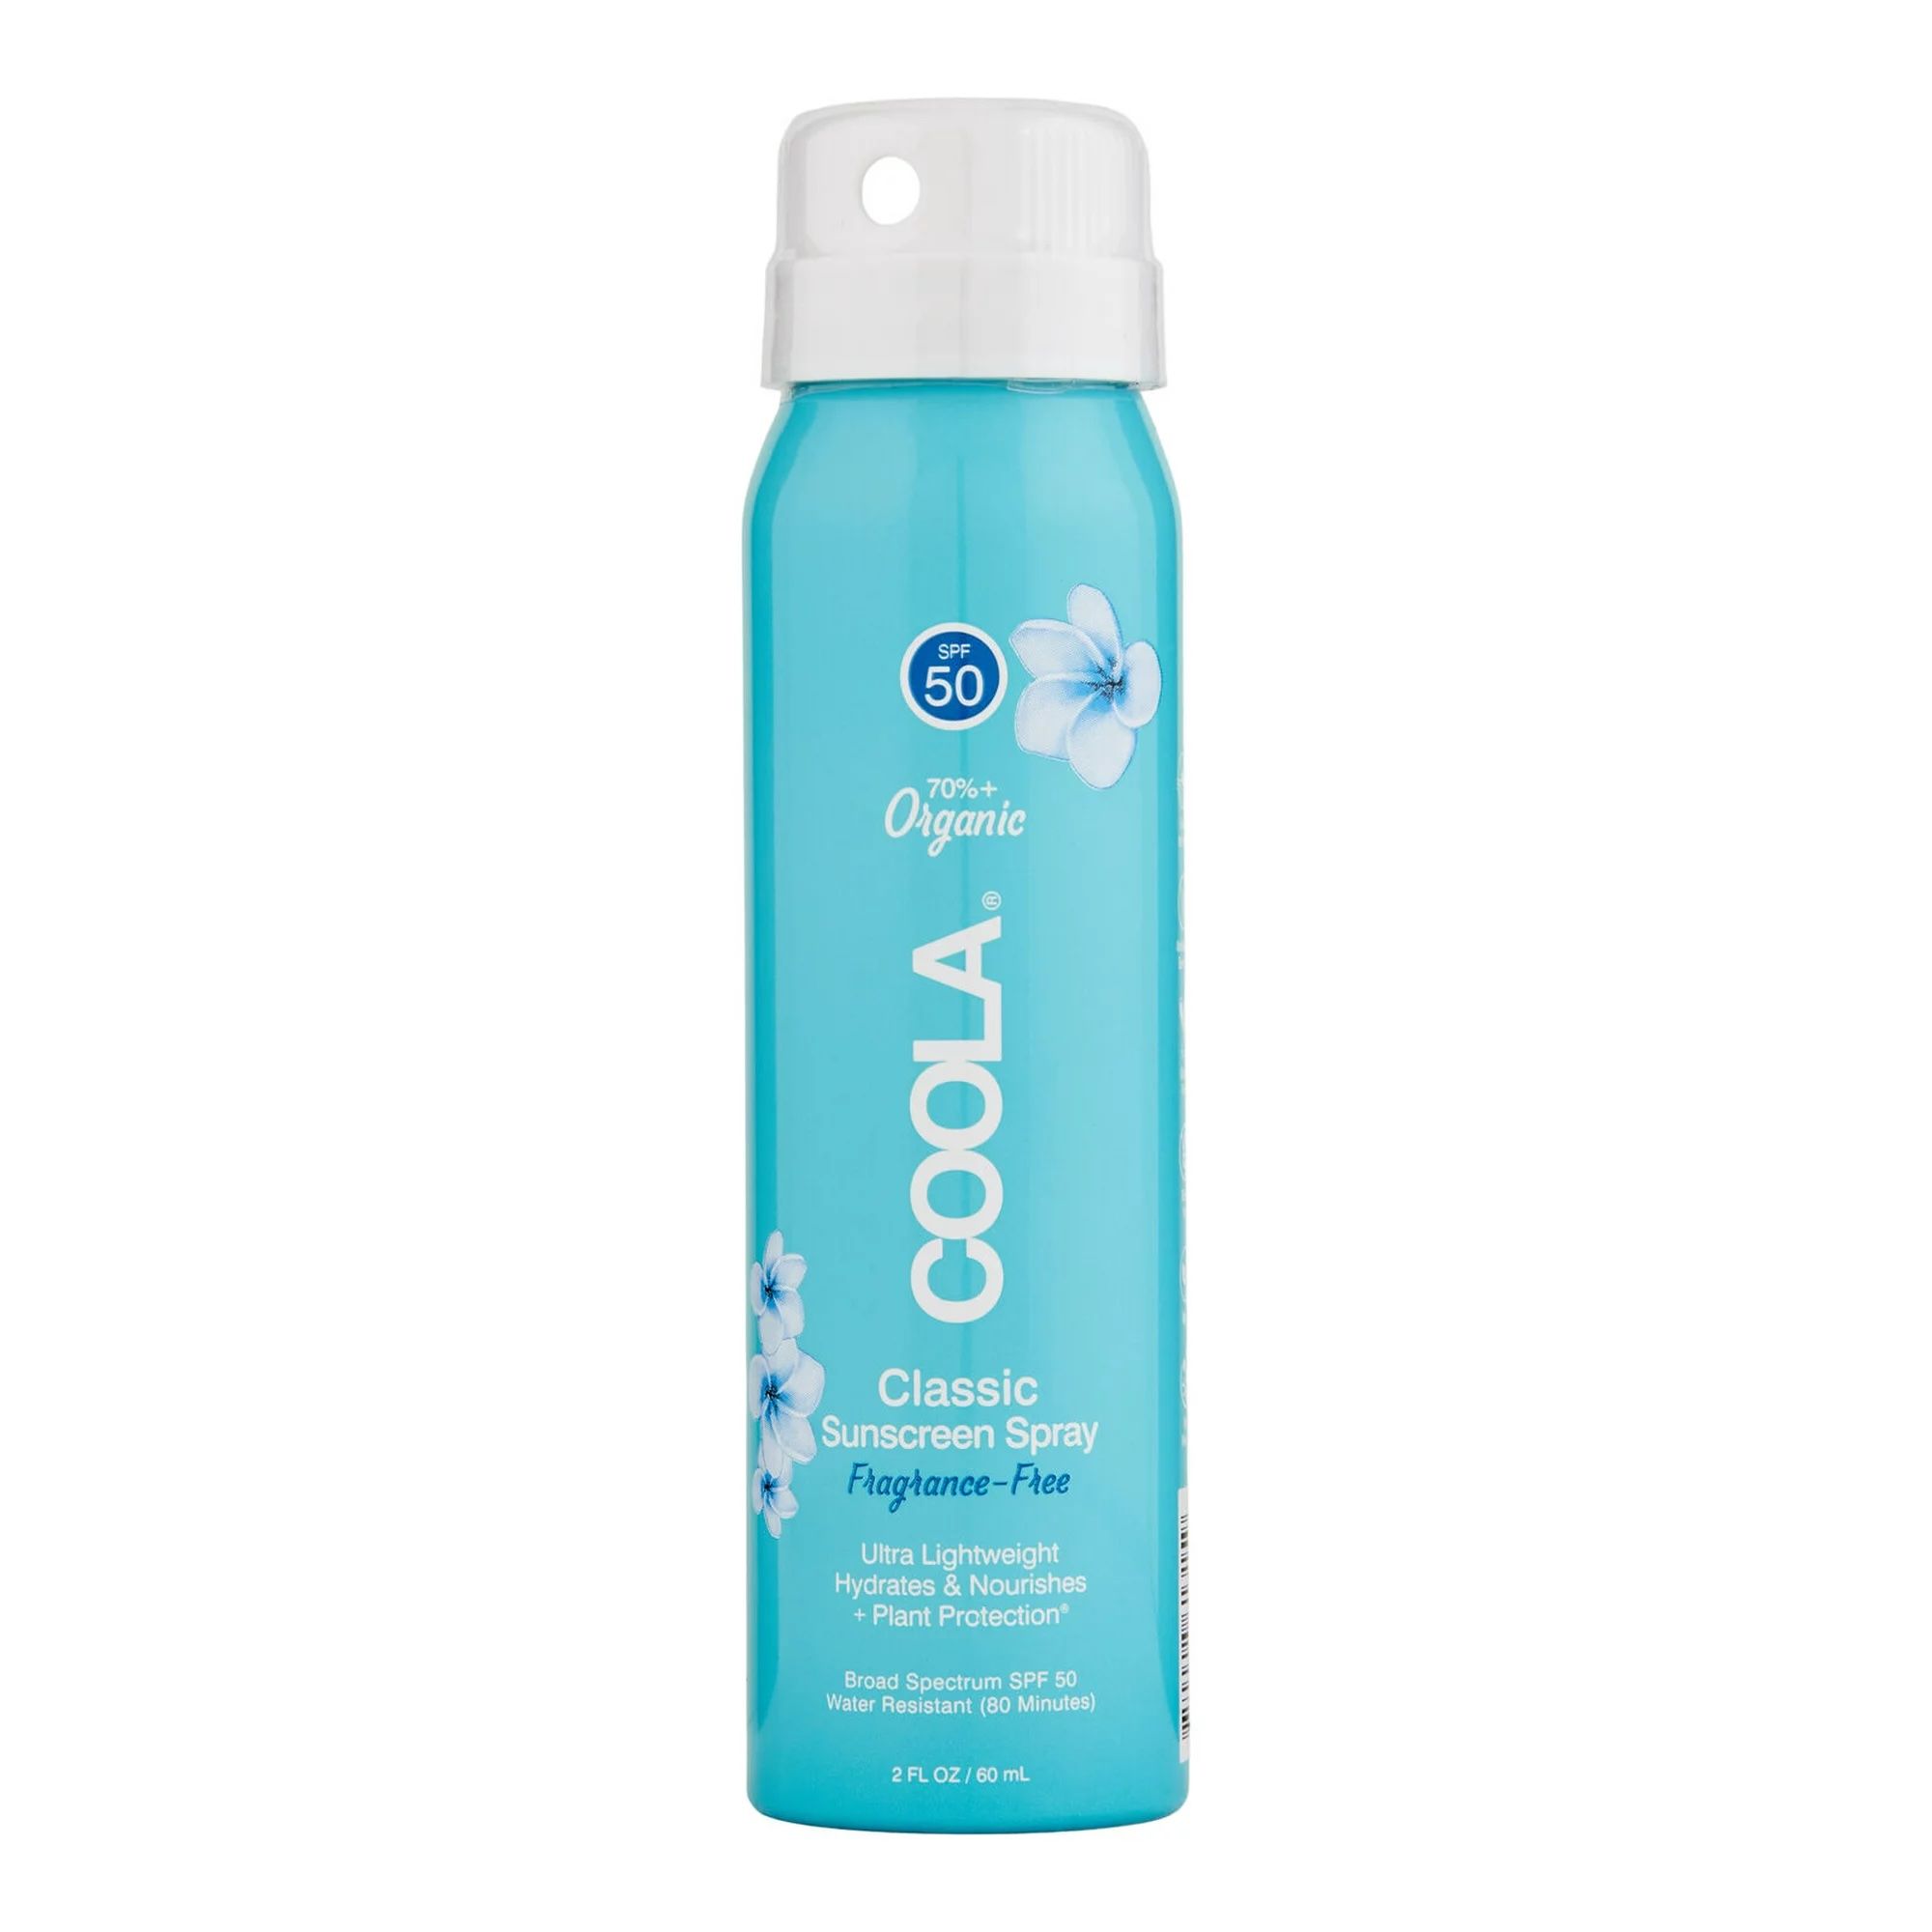 COOLA Classic Body Organic Sunscreen Spray, Fragrance Free, SPF 50 - 2 fl oz